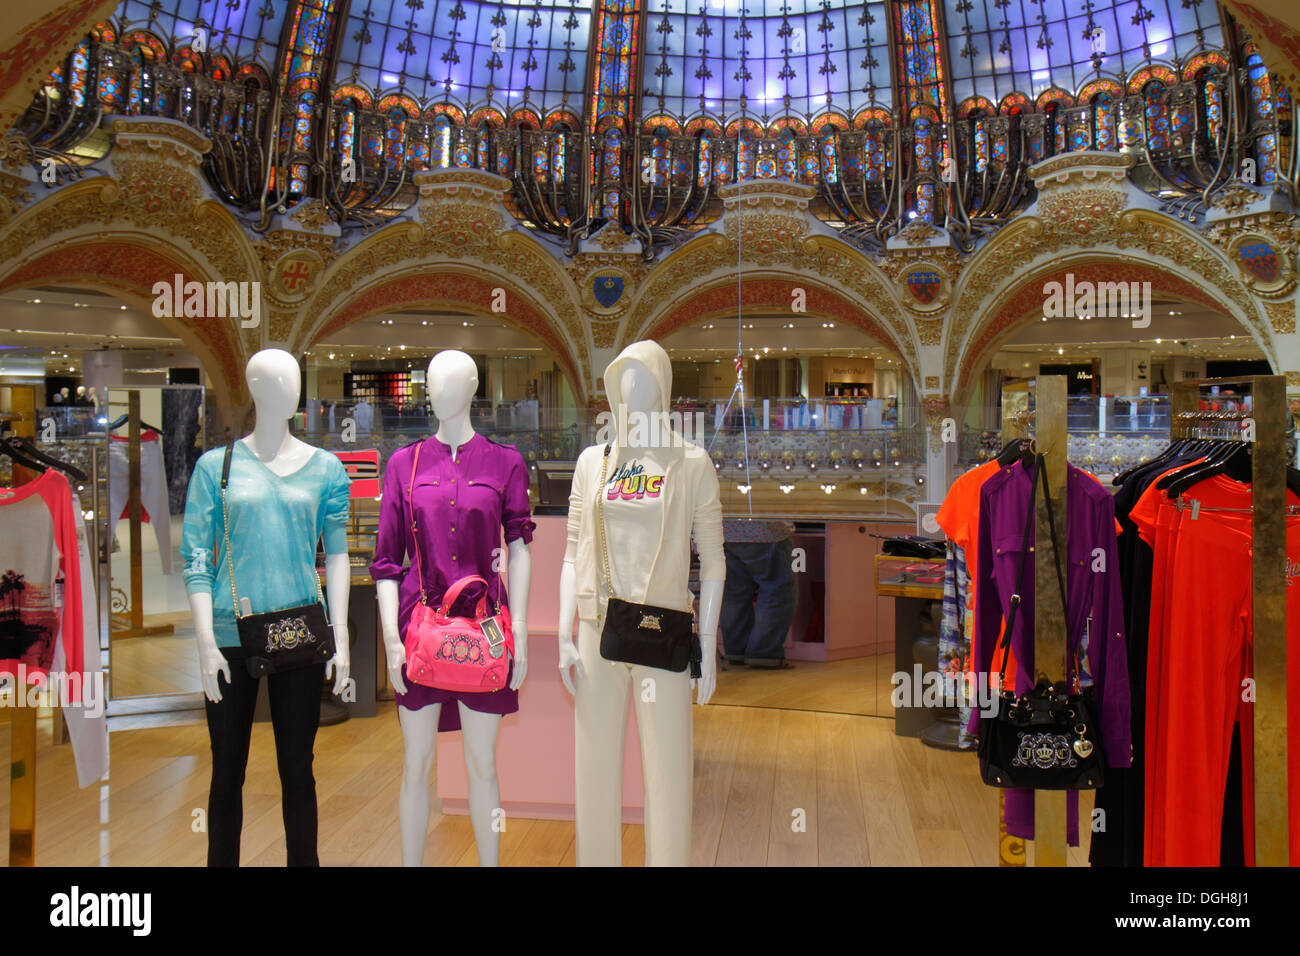 Paris fashion shops hi-res stock photography and images - Alamy